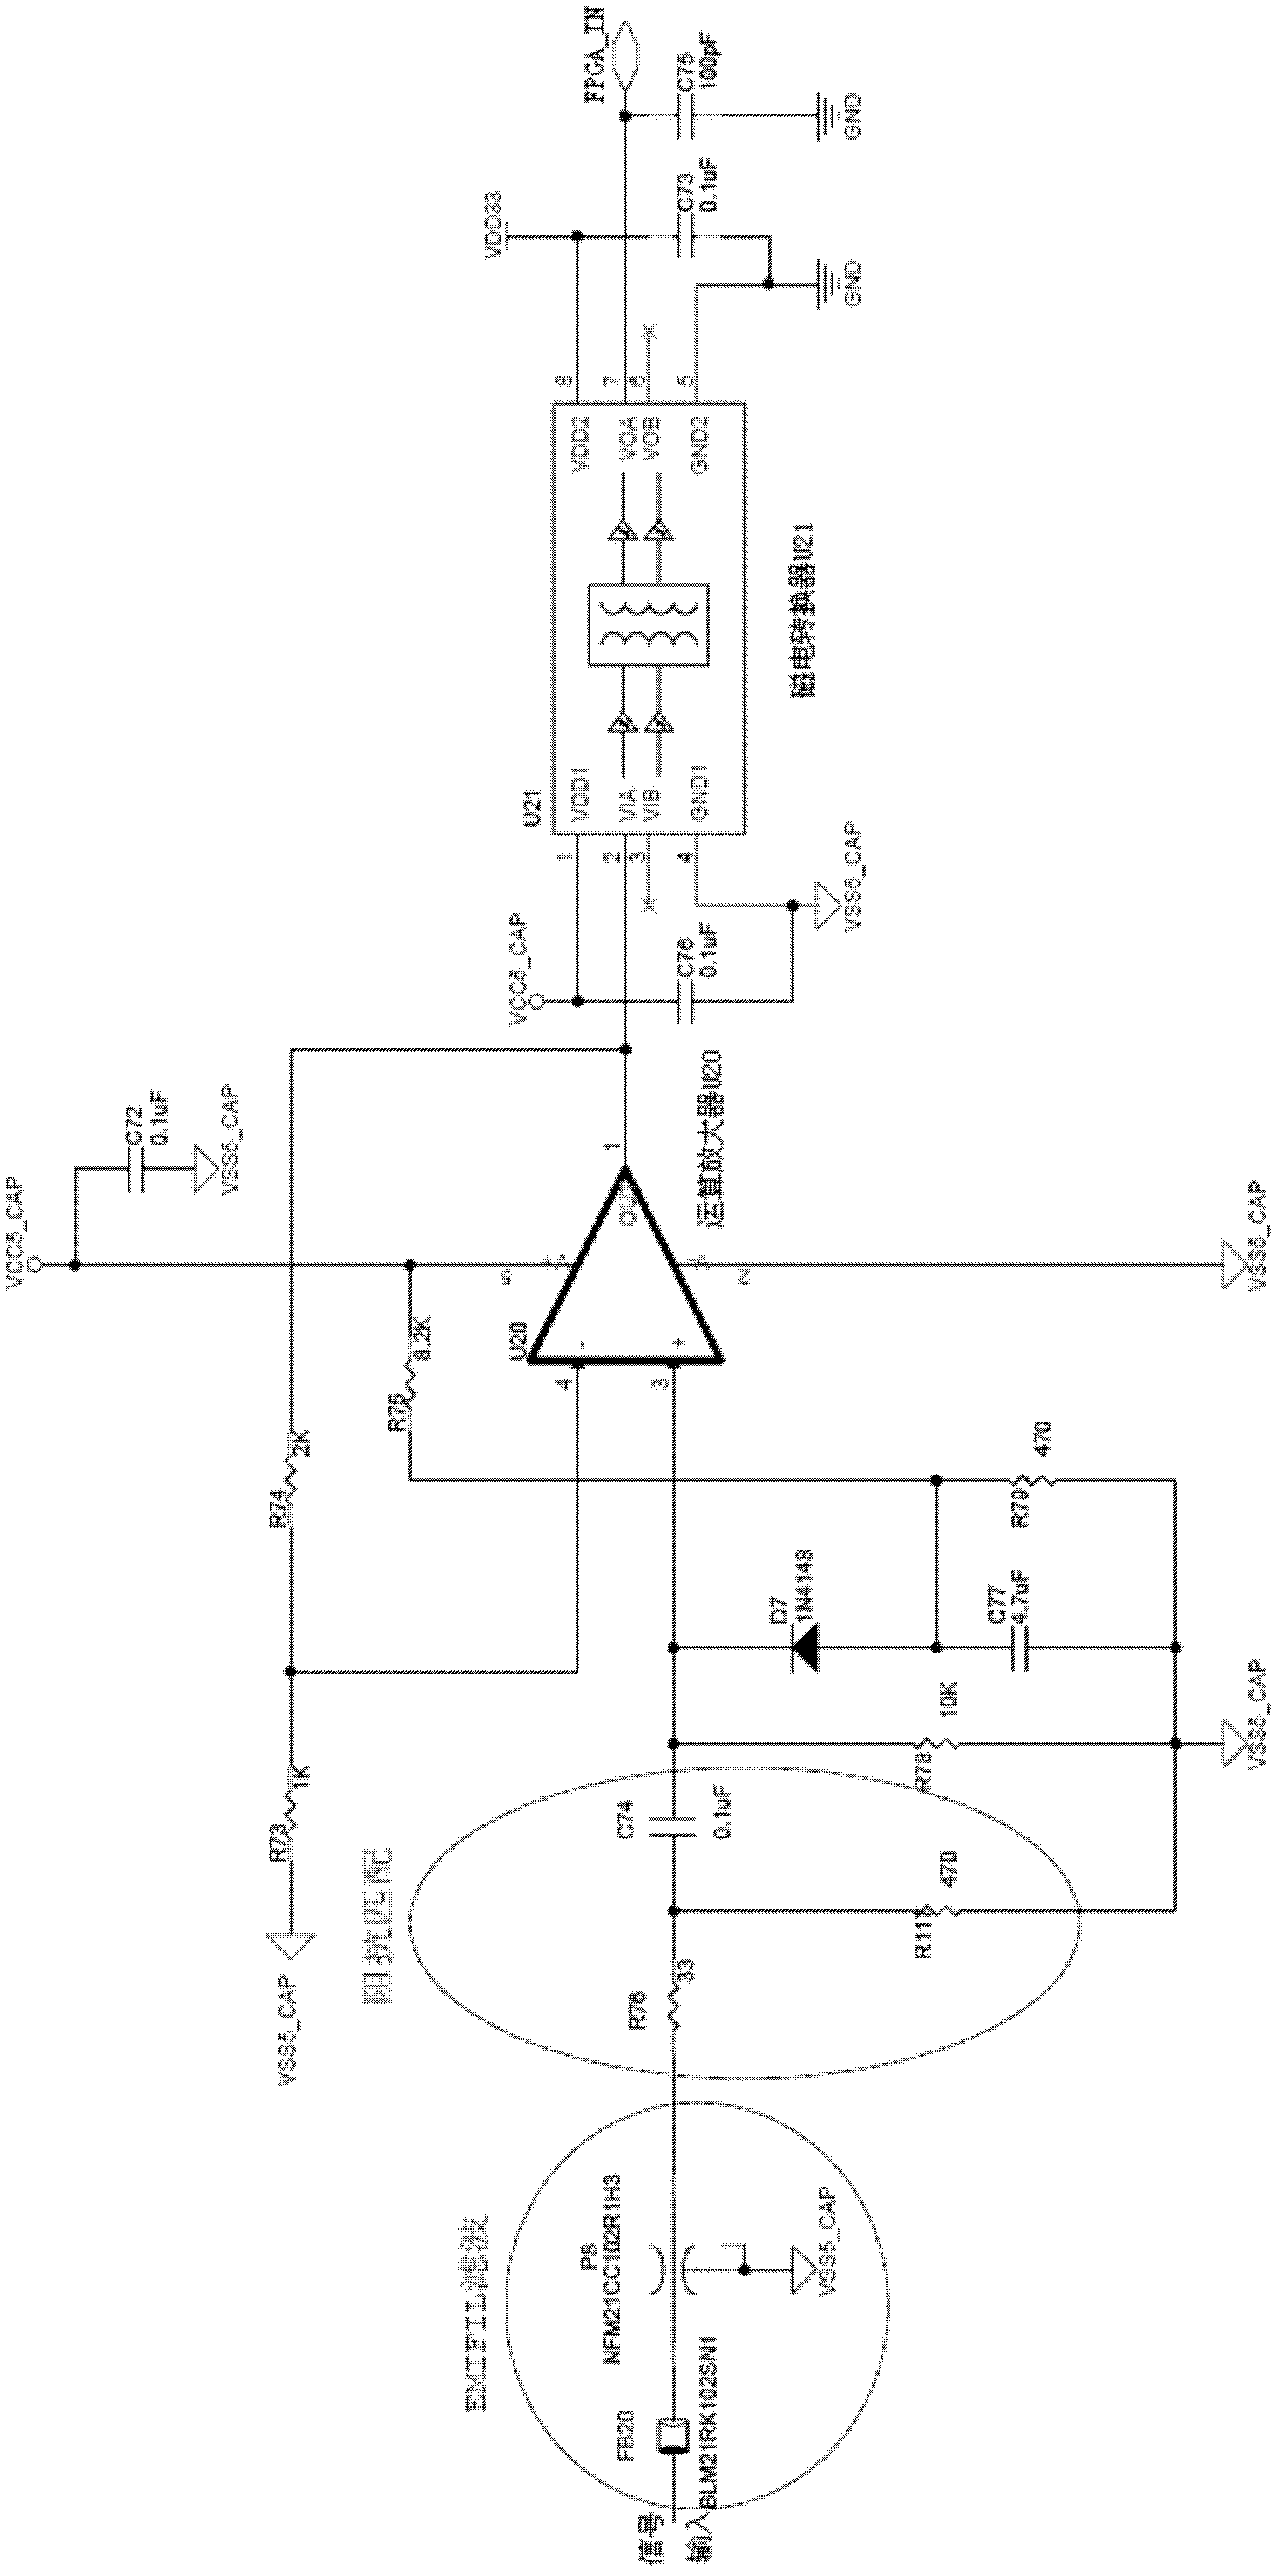 Method for digital closed-loop control capacitance raising system